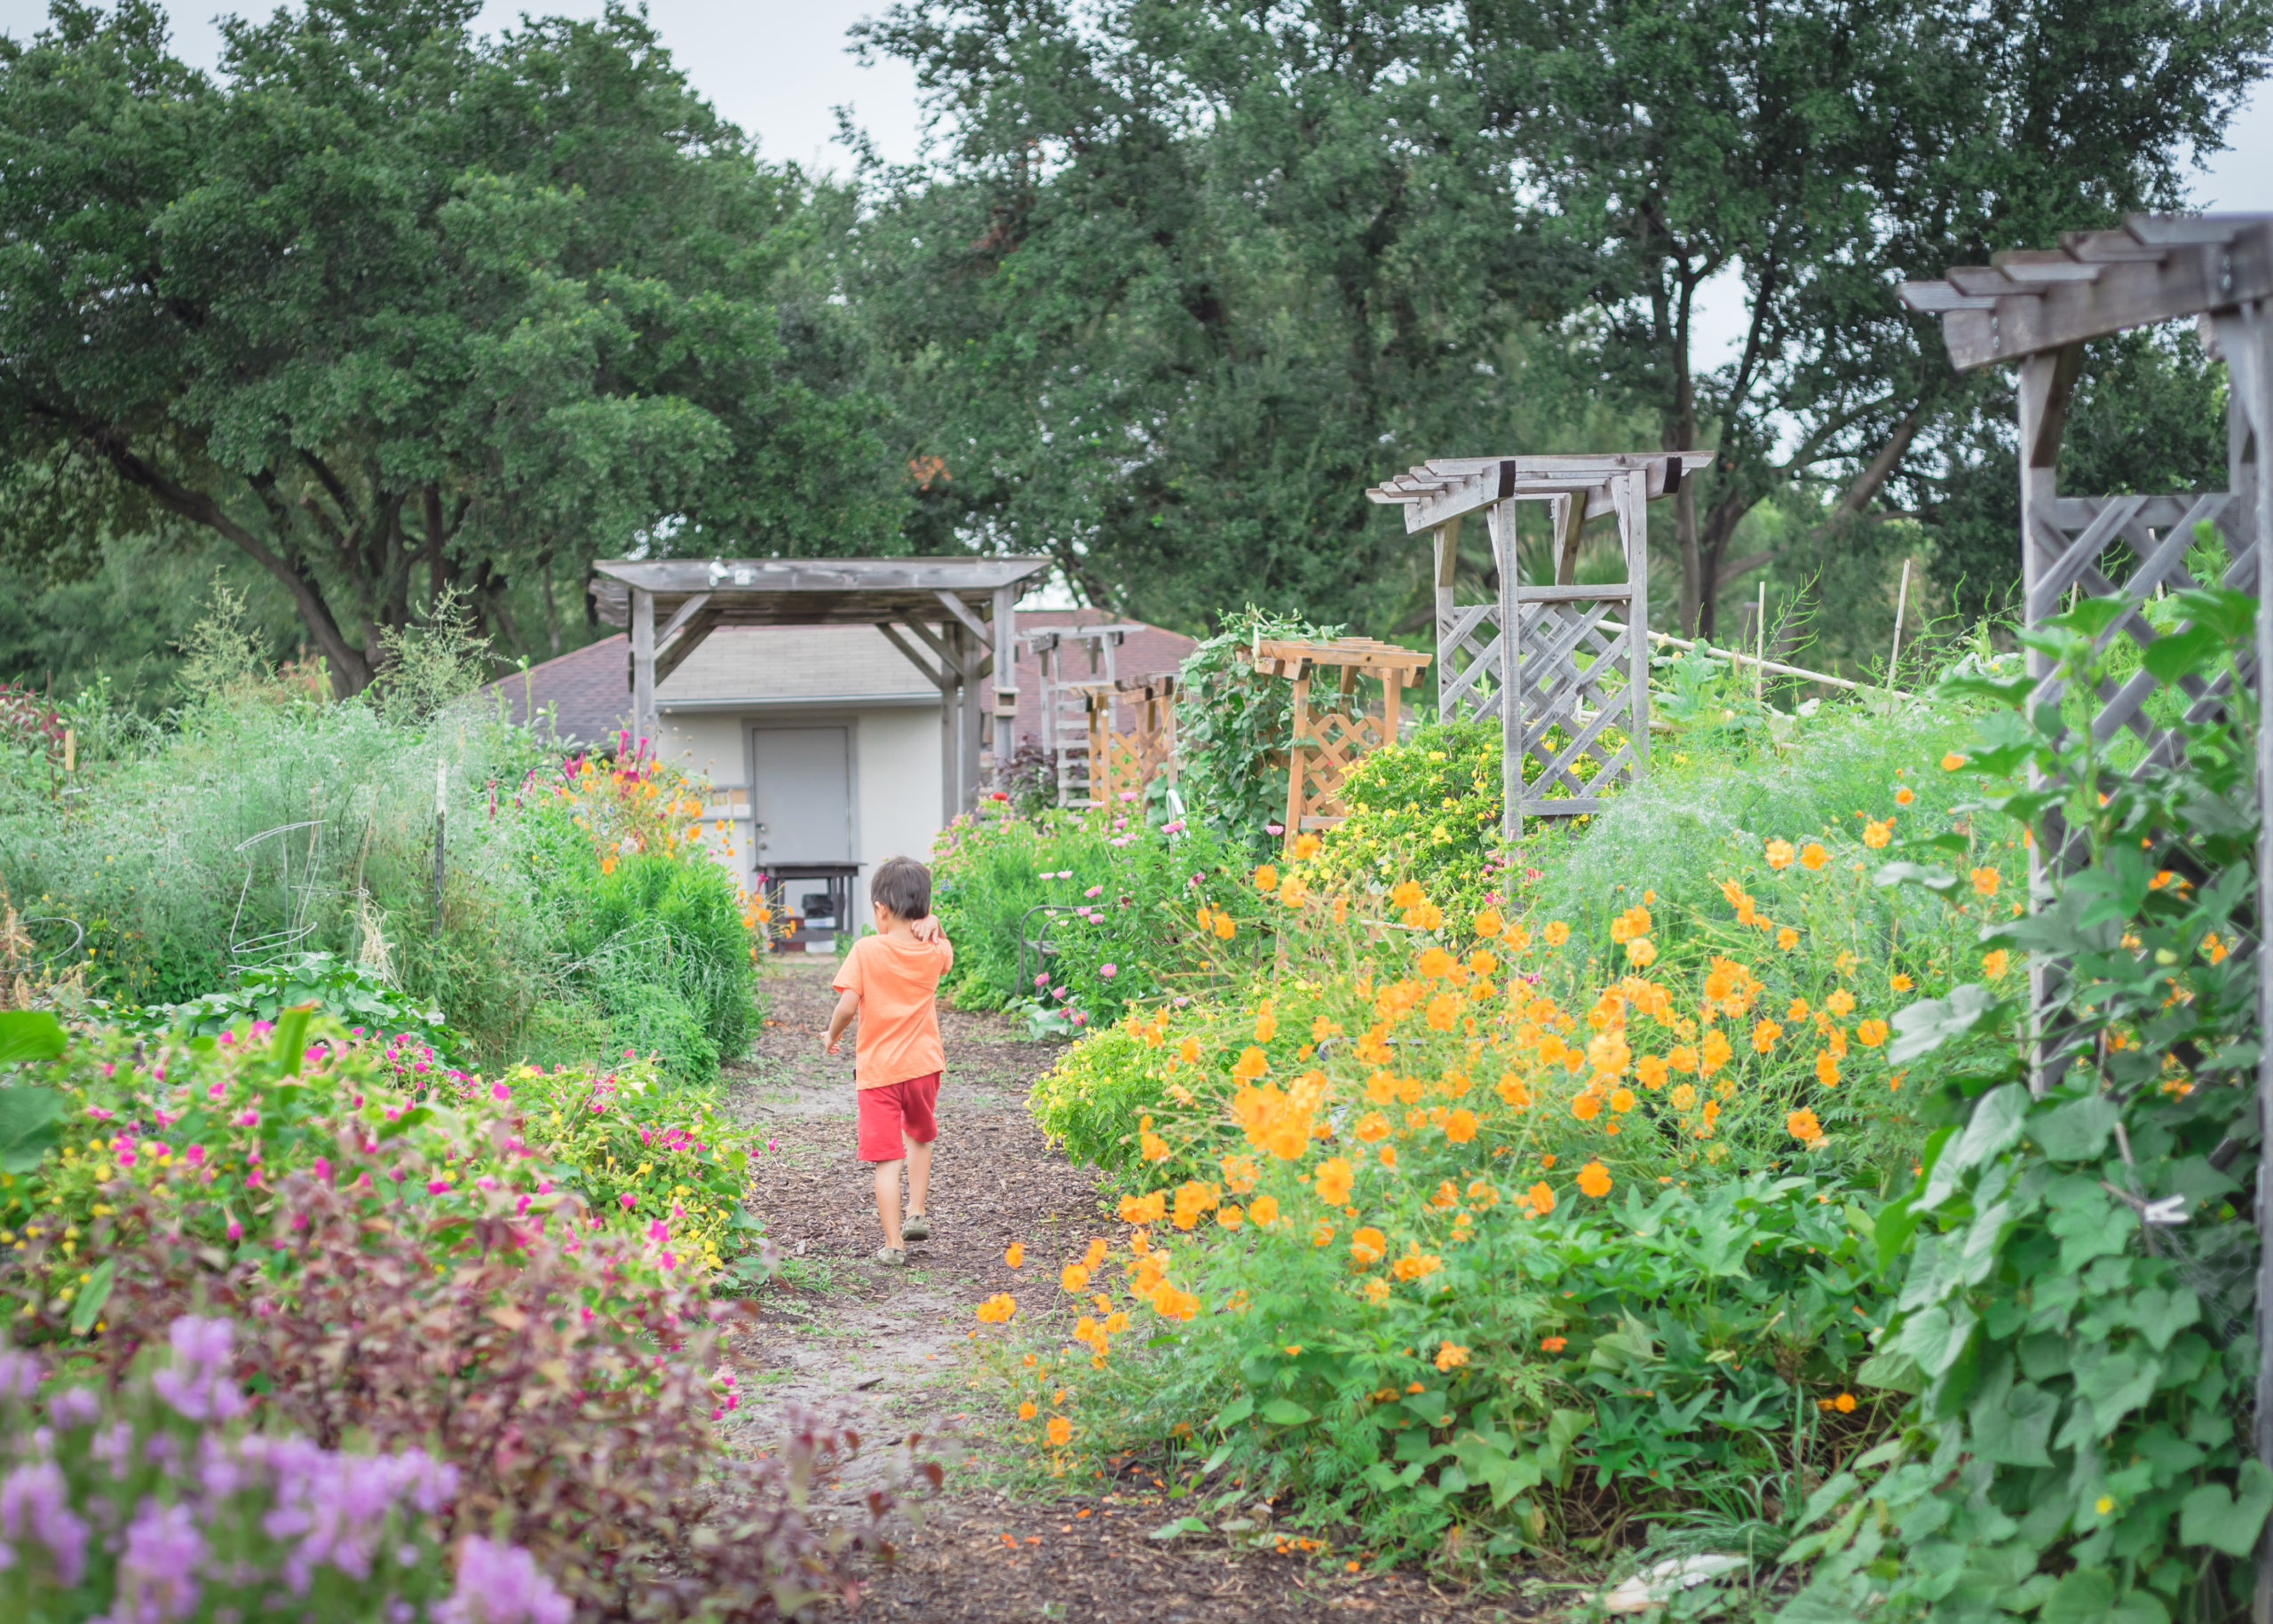 Lush pollinator garden. Photo: Shutterstock.